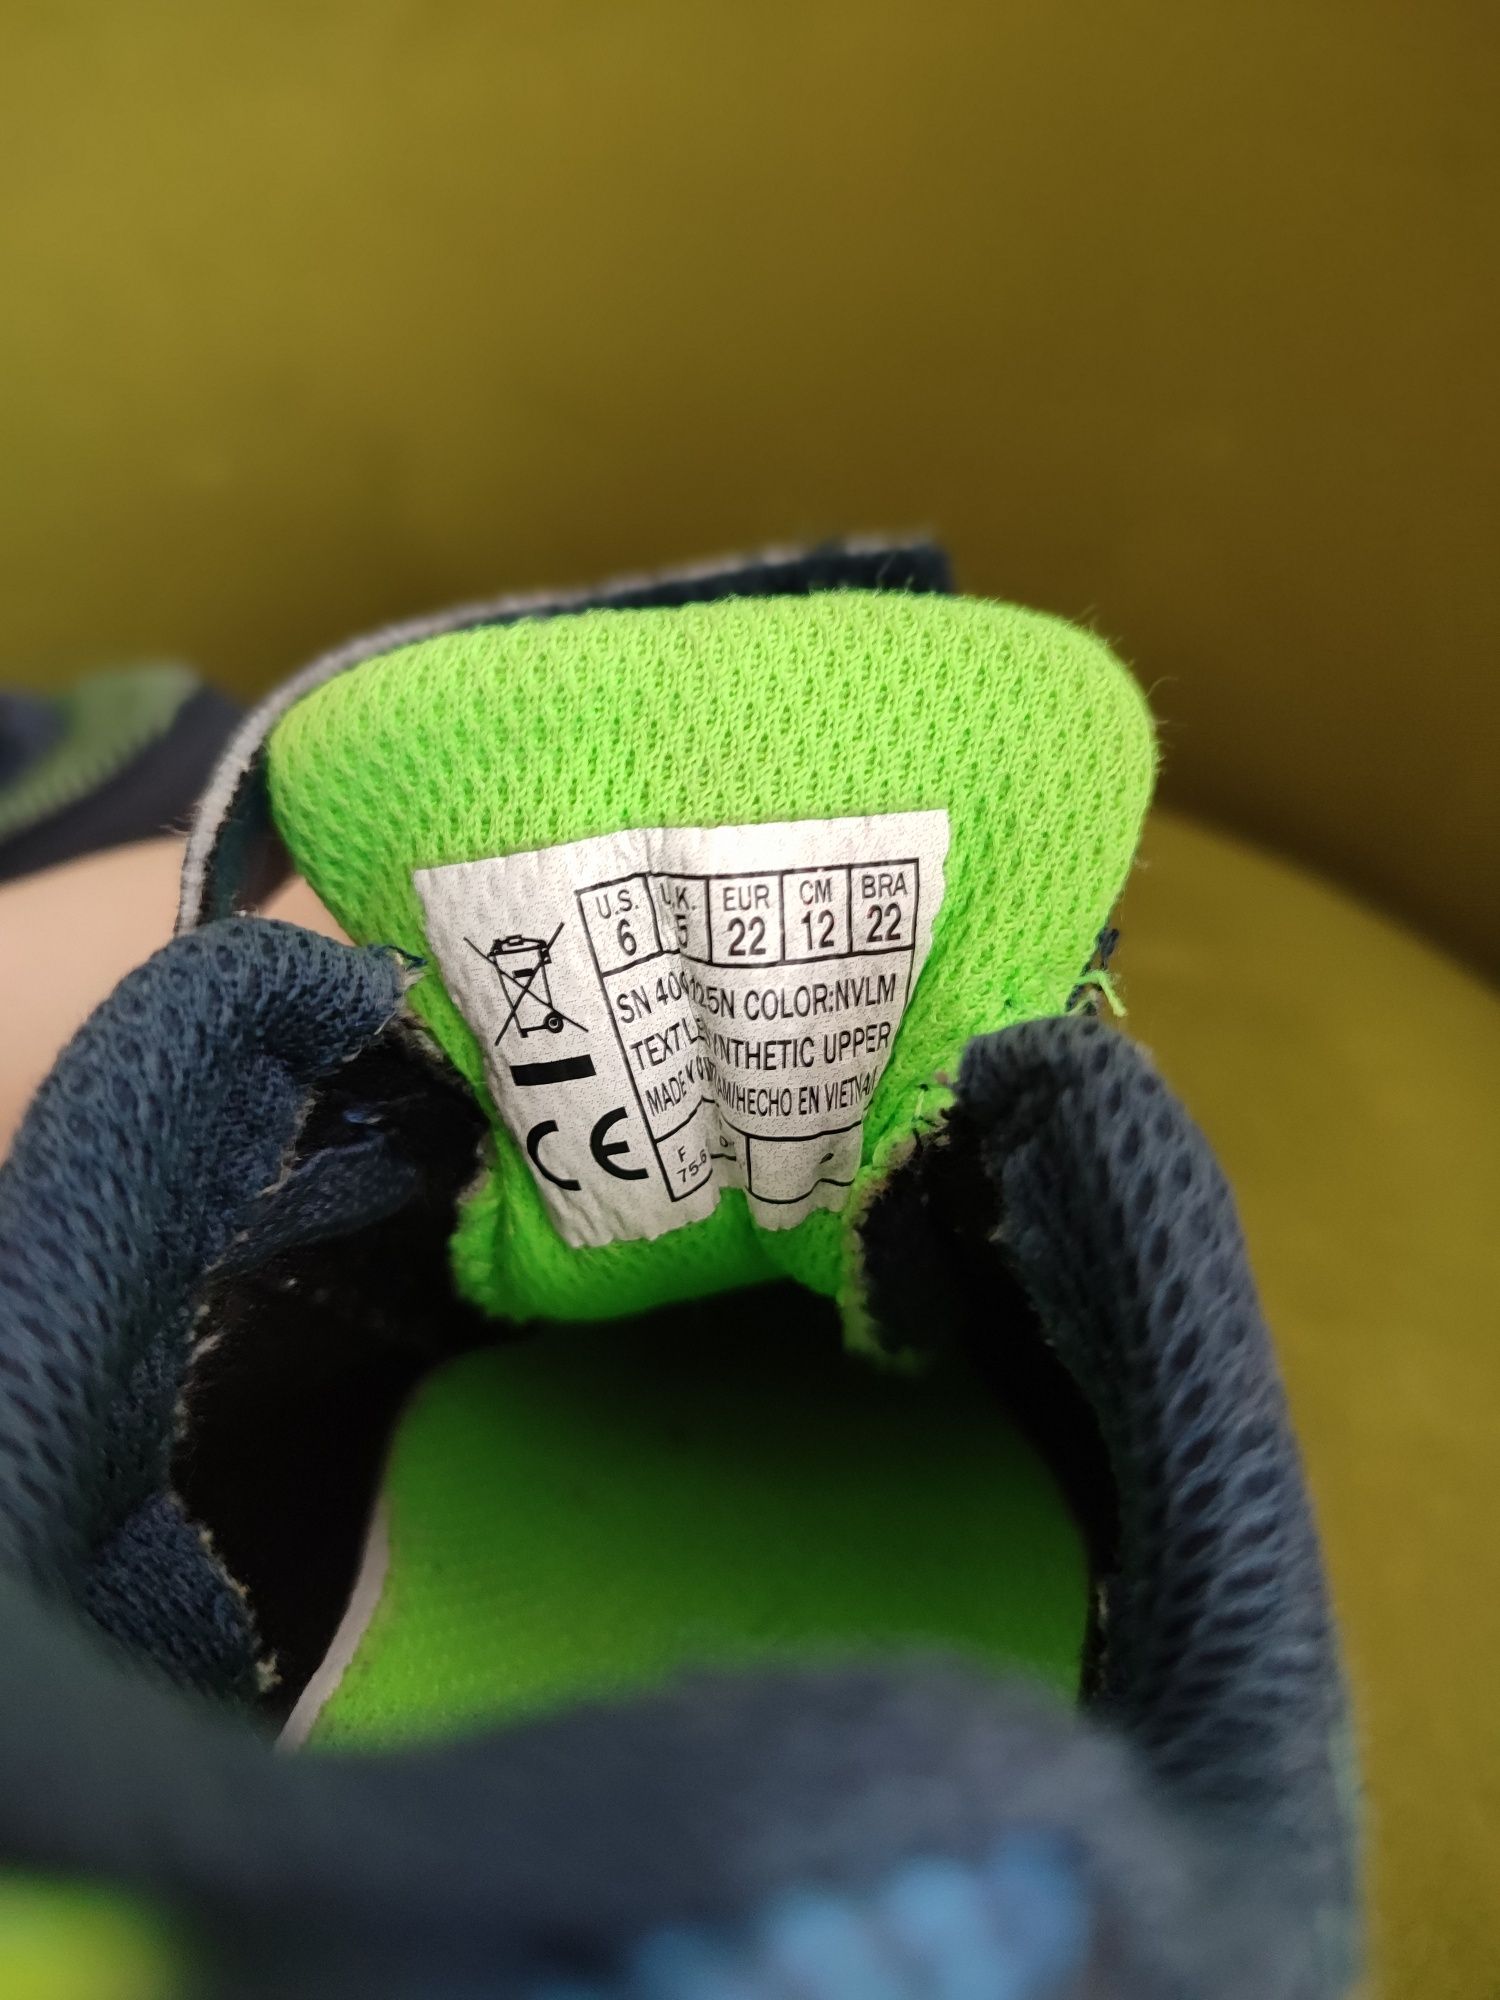 Adidasi copii Skechers S-lights 22, Nike 22, Primark